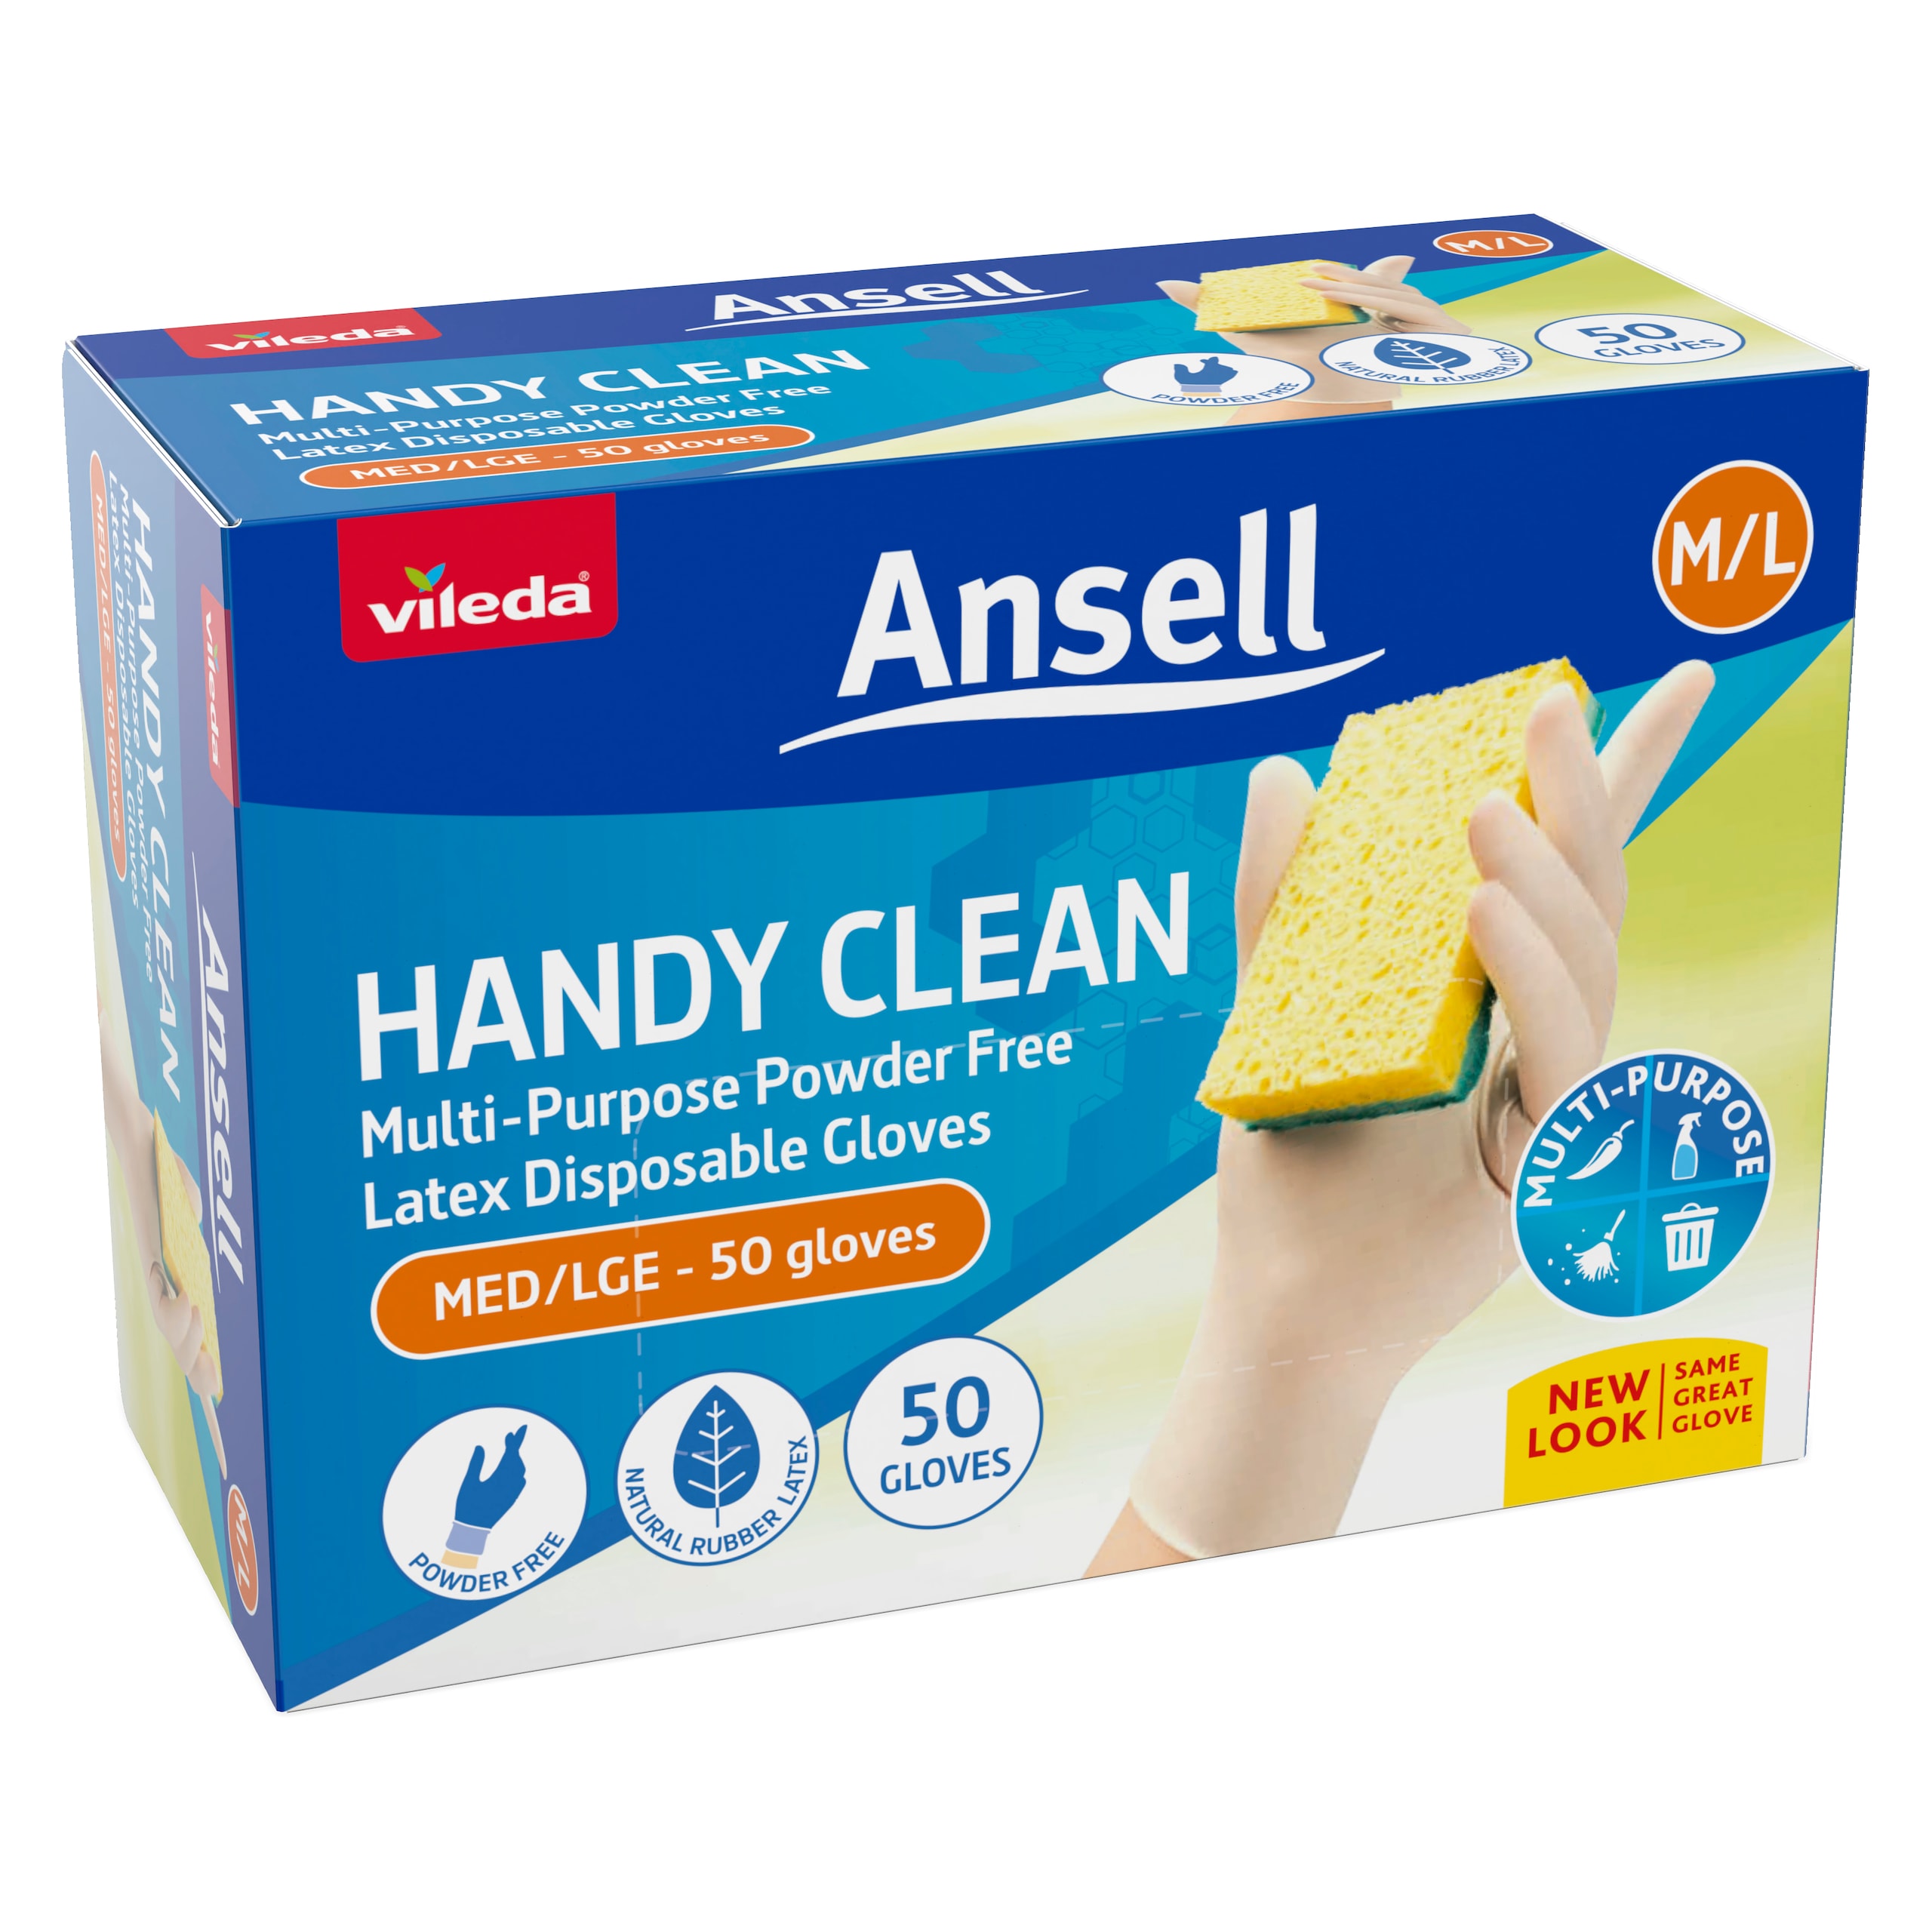 Vileda Ansell Handy Clean Latex Gloves 50-Pack - M/L